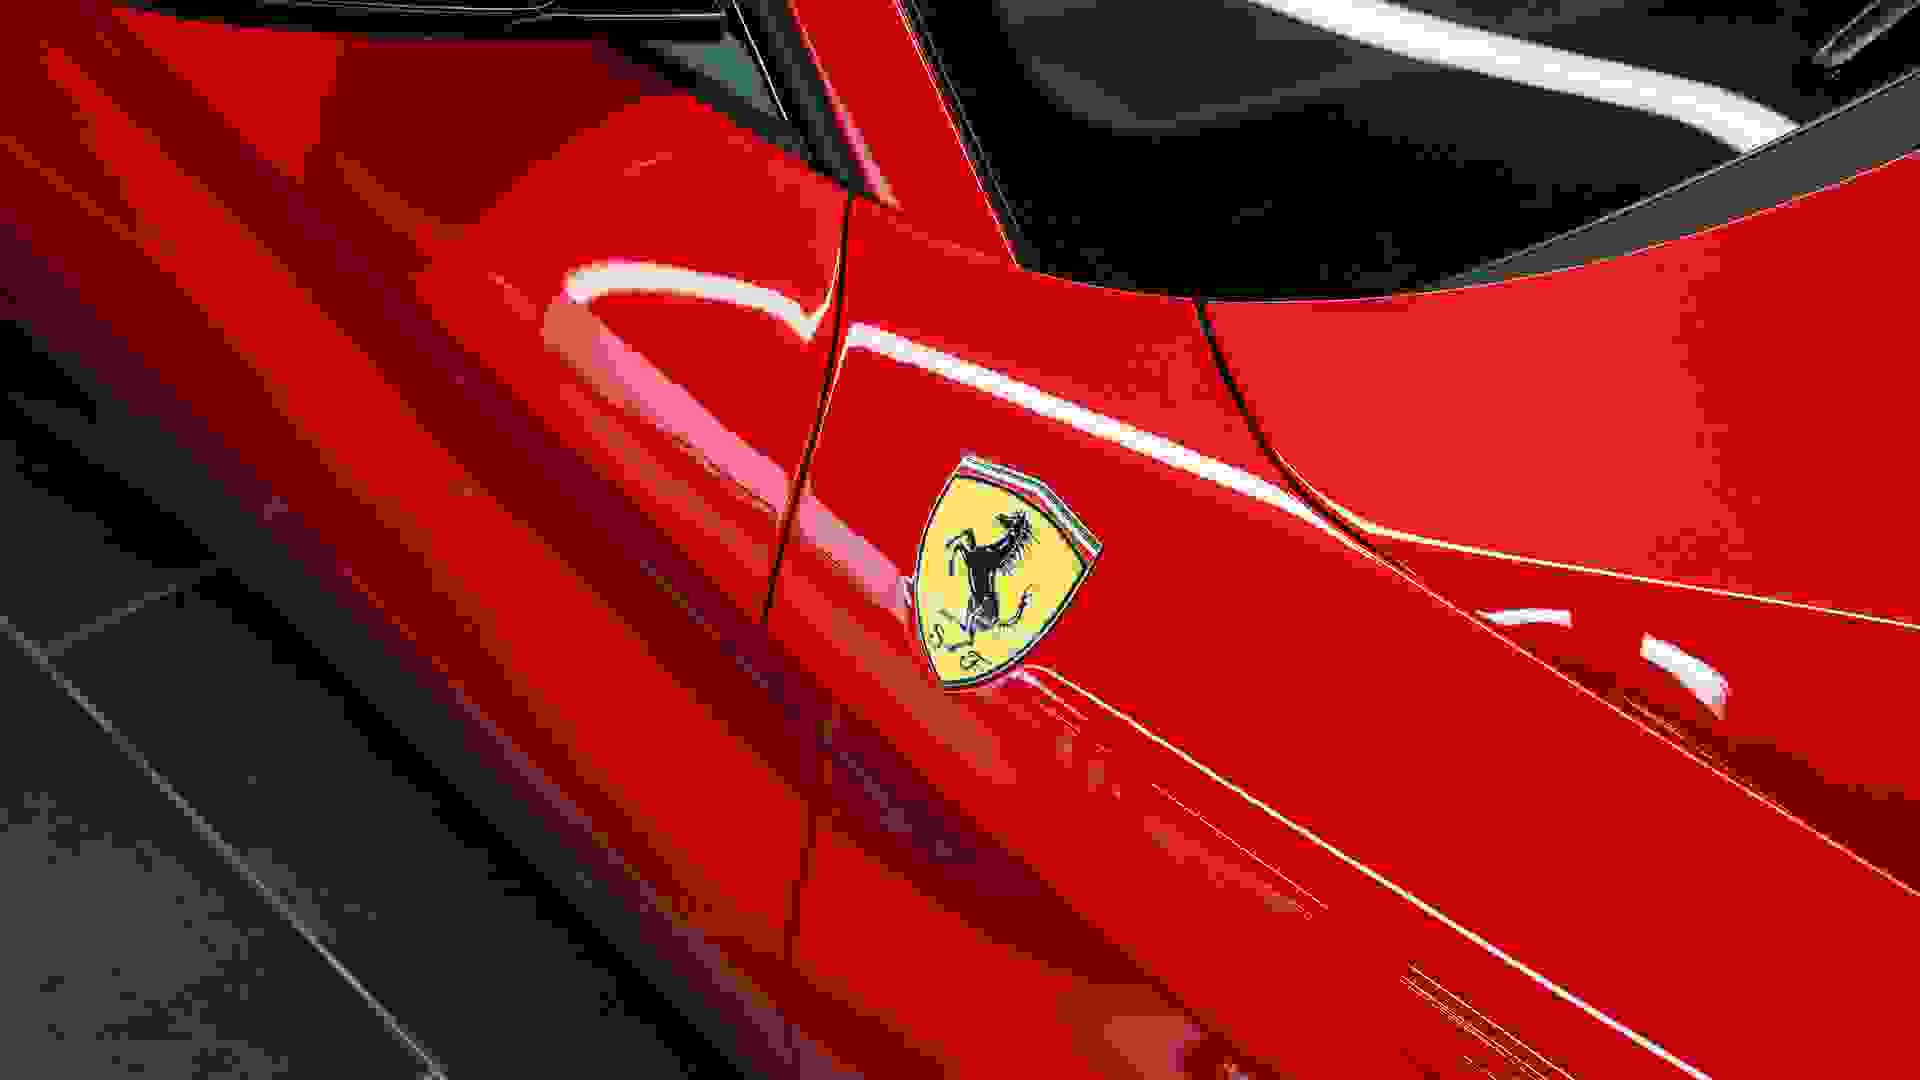 Ferrari F12 Photo b0beb15b-1051-43ed-be99-99e86cf8ea65.jpg